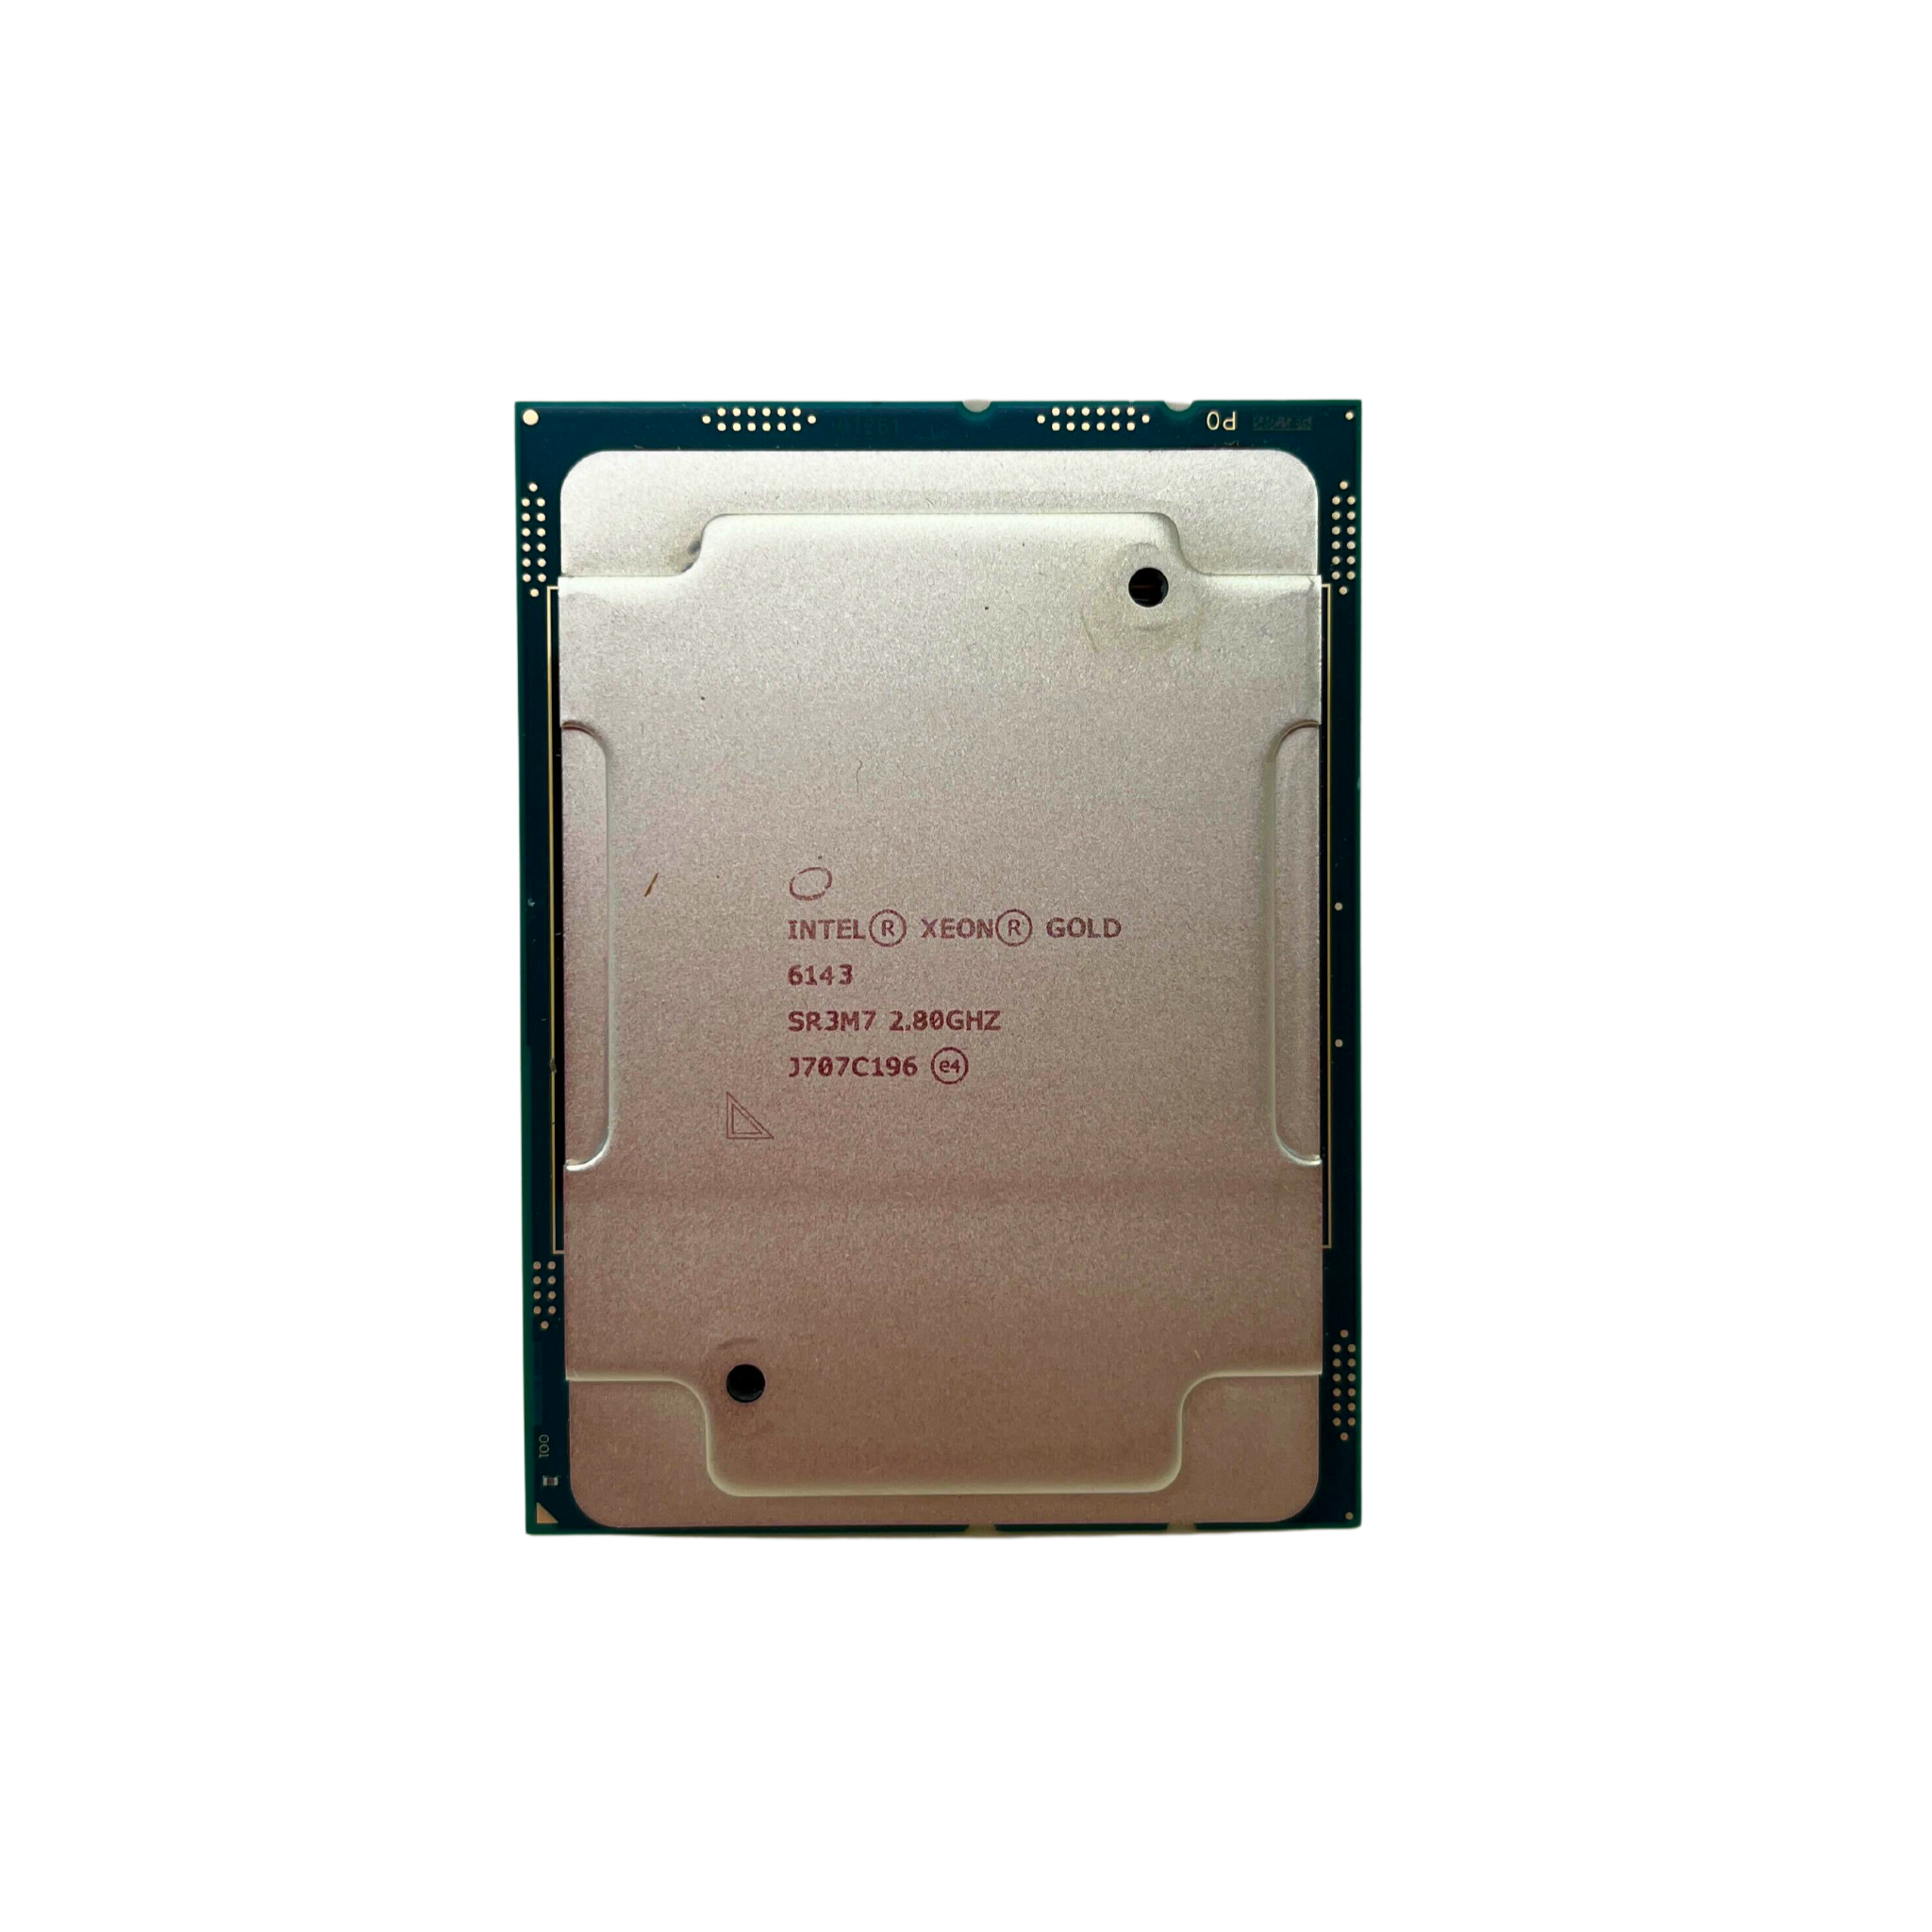 Intel Xeon Gold 6143 2.8ghz 22mb 16 Core CPU Processor (Gold 6143)